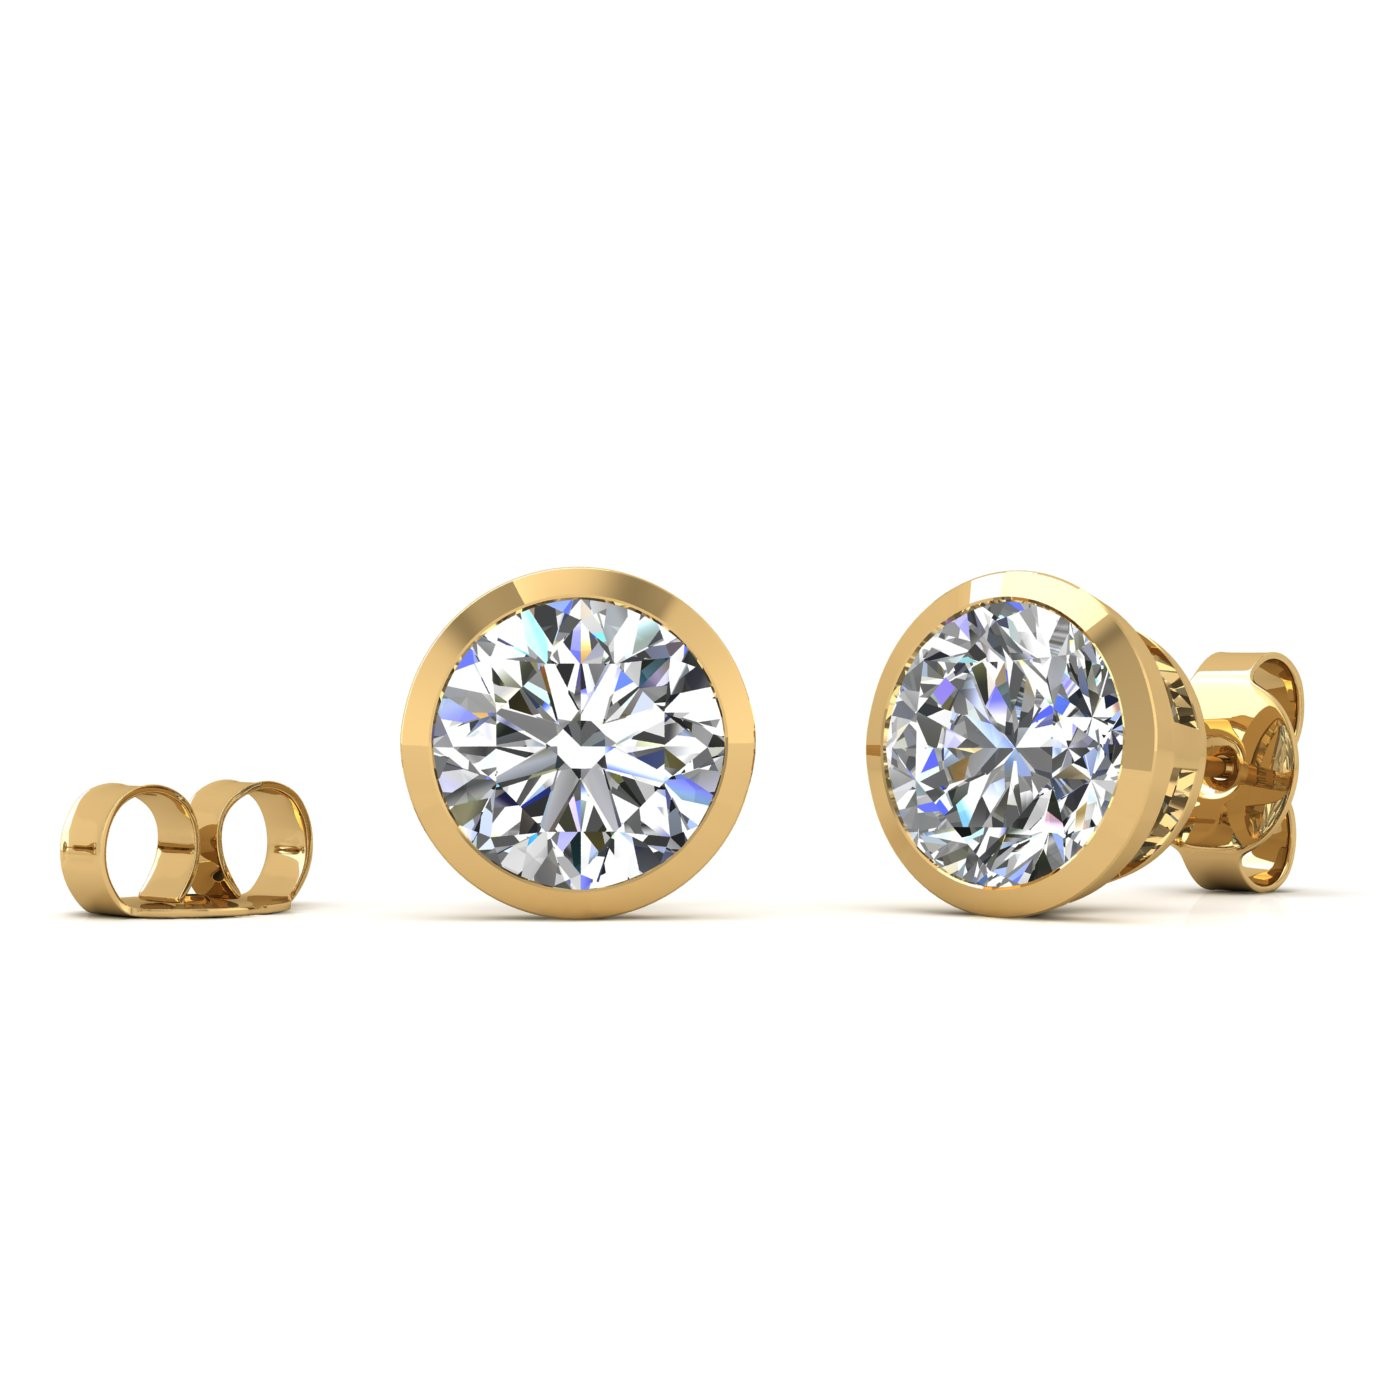 18k white gold 1.2 ct each (2,4 tcw) round brilliant cut diamond bezel set earring studs Photos & images